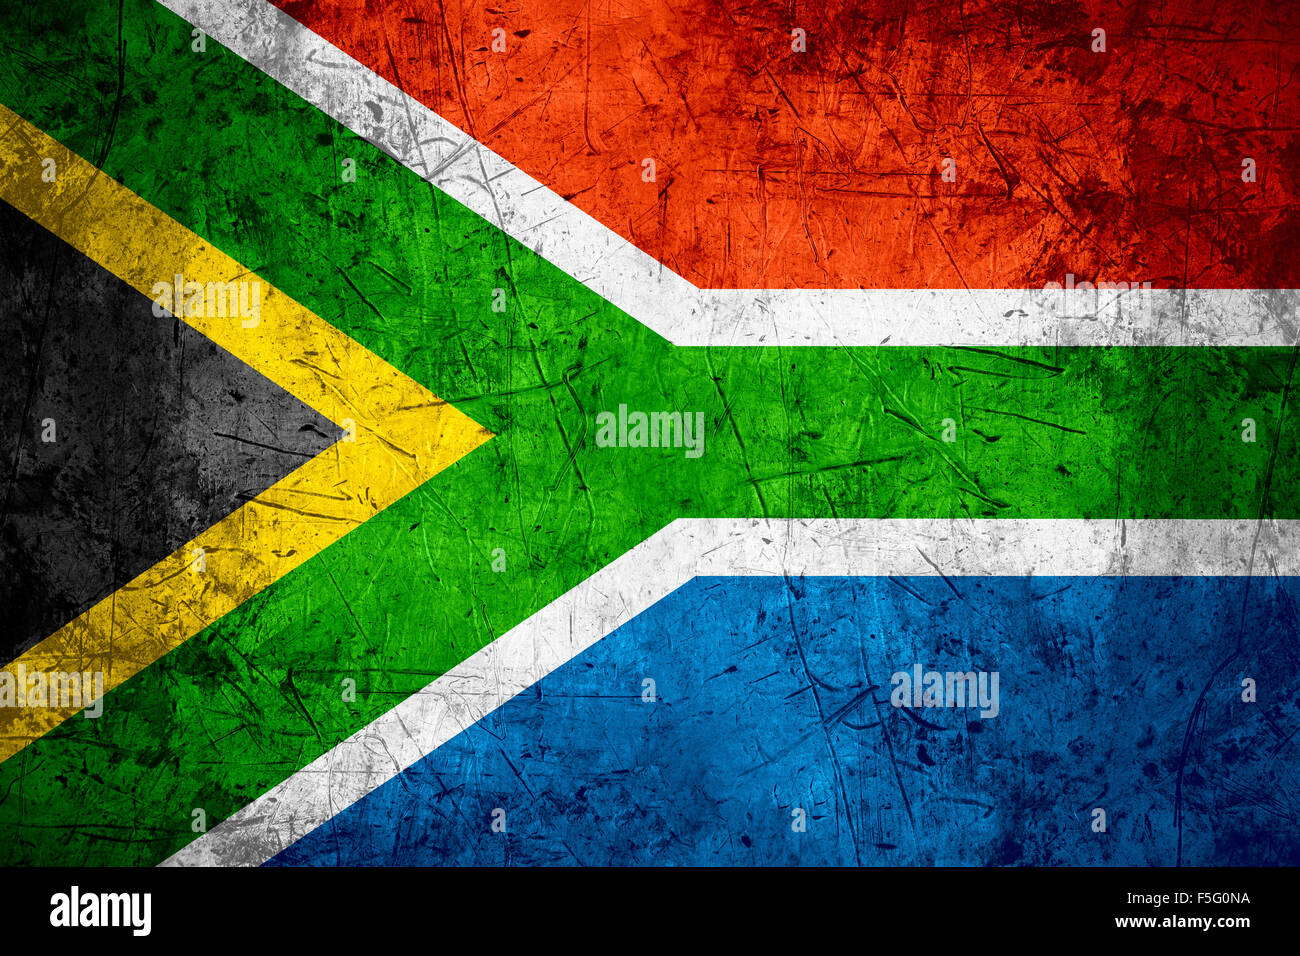 República de Sudáfrica bandera o banner en Sudáfrica patrón irregular de fondo de metal Foto de stock